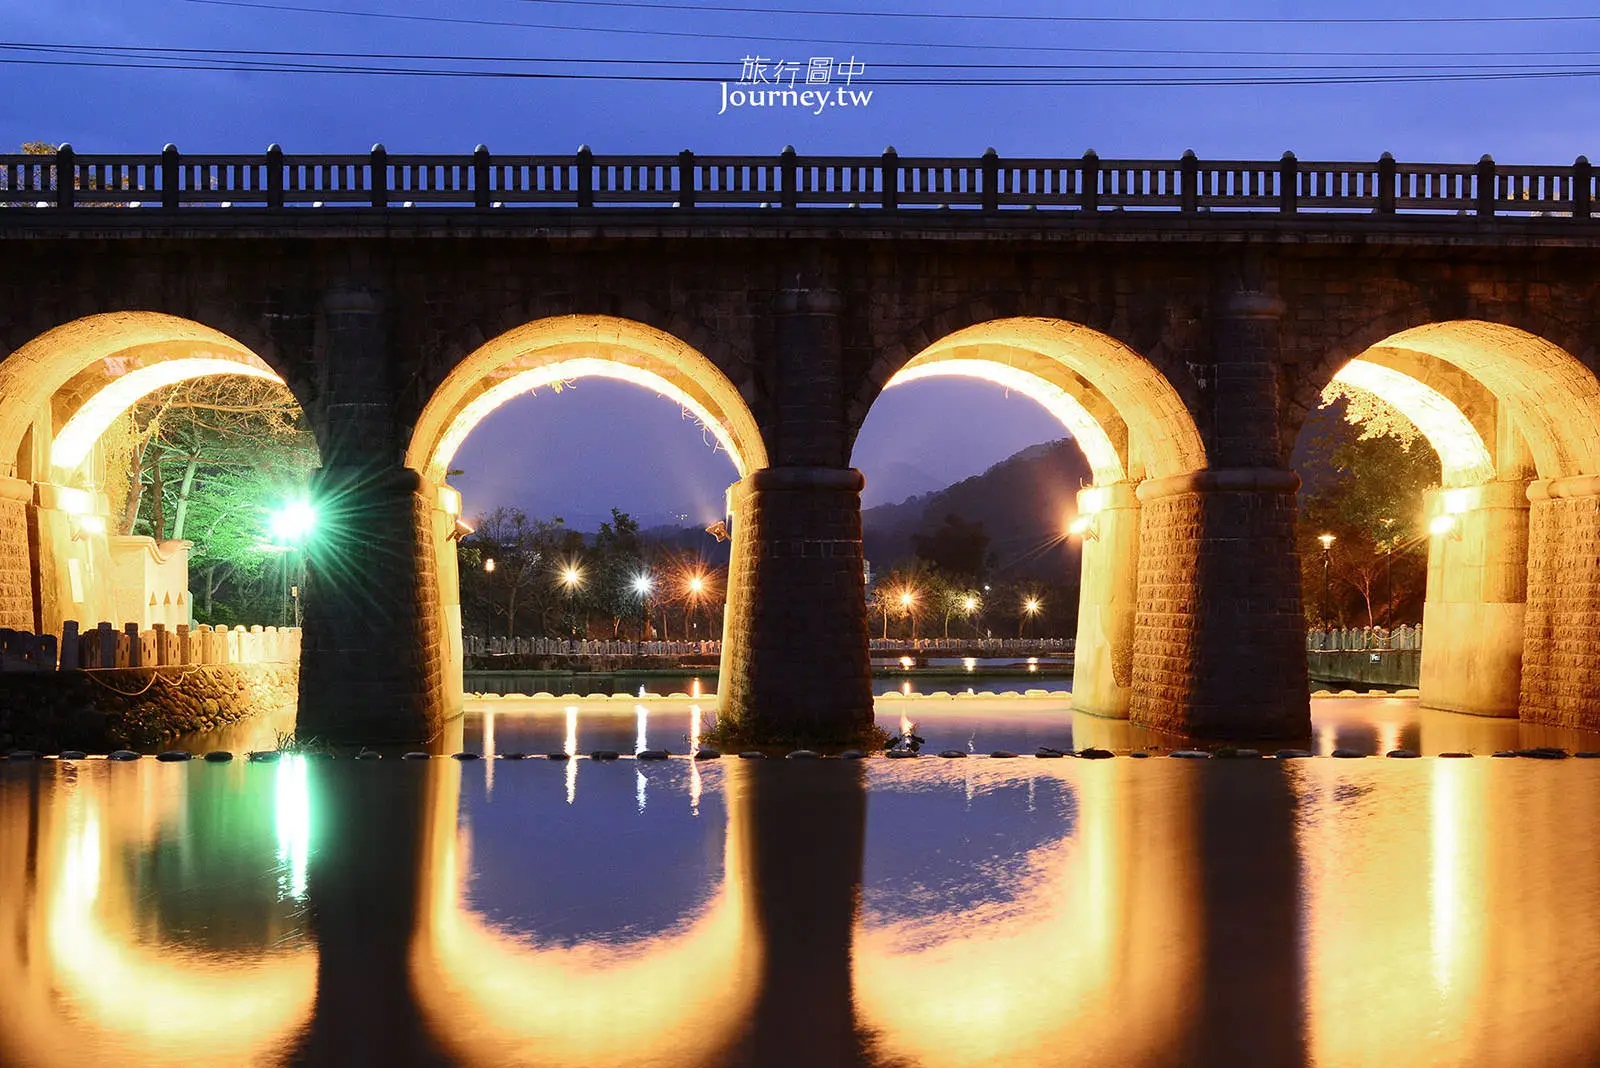 Dong'an Ancient Bridge